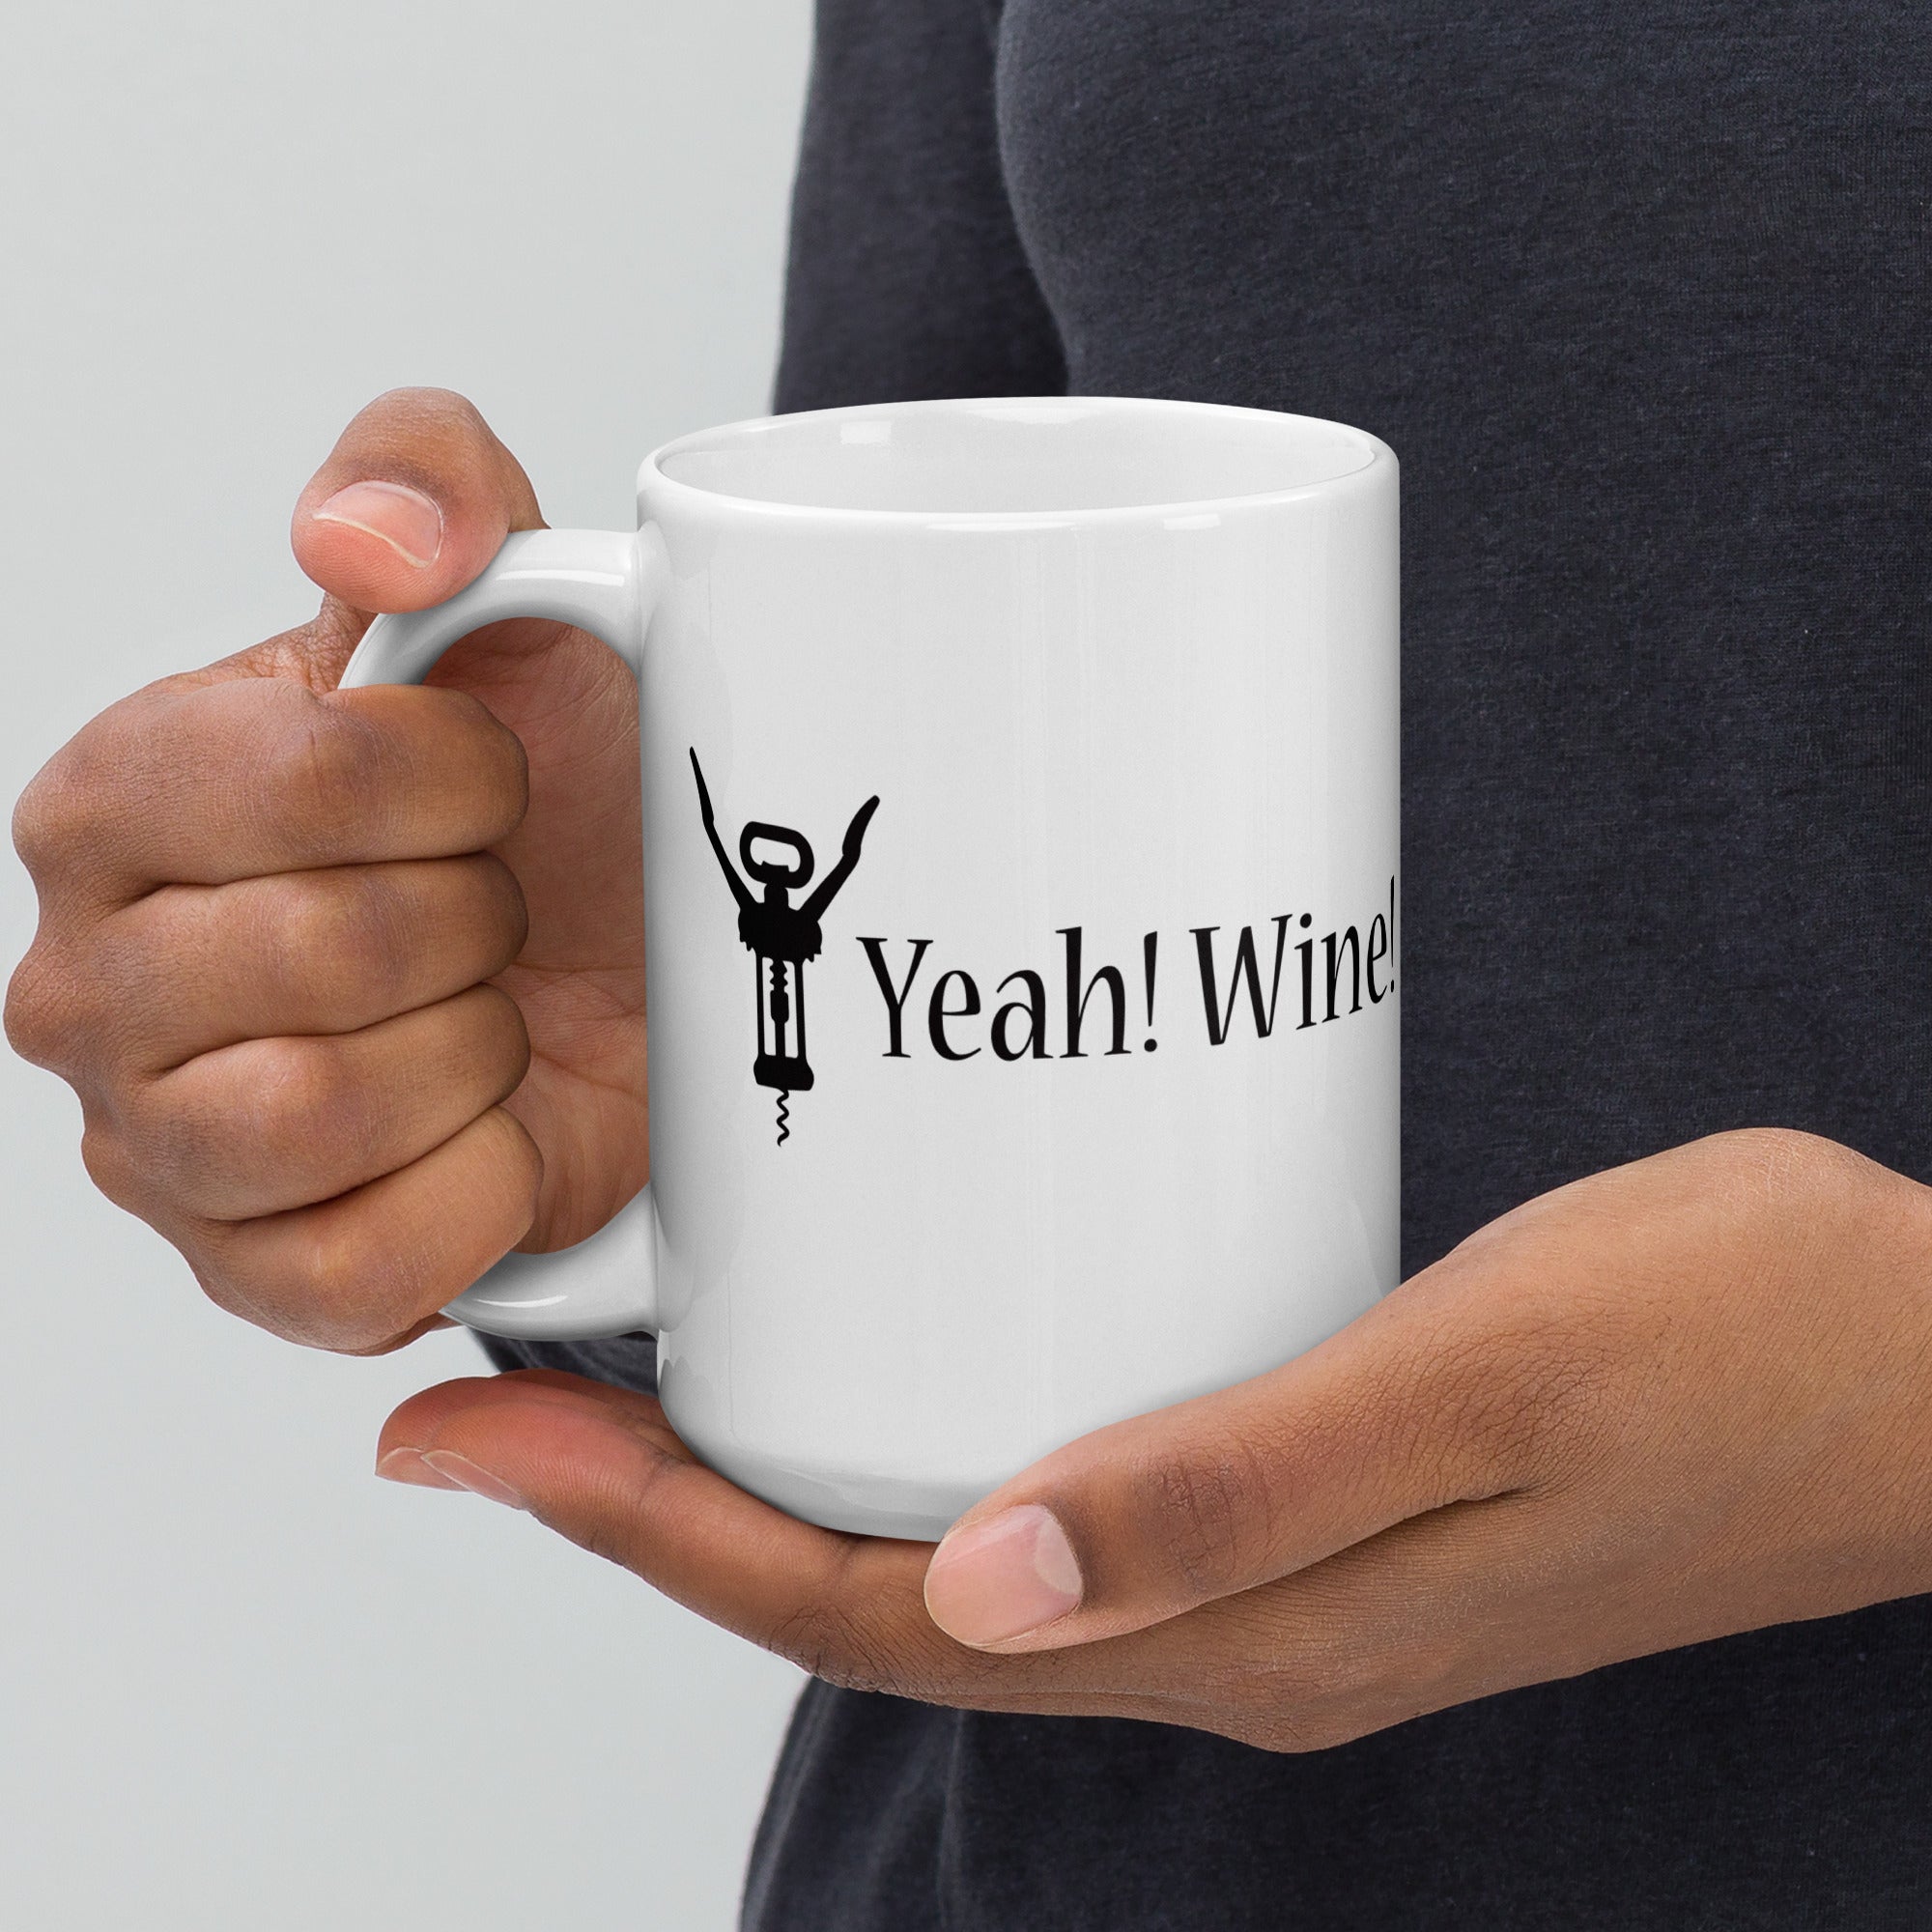 Yeah! Wine! Black Lettering White glossy mug